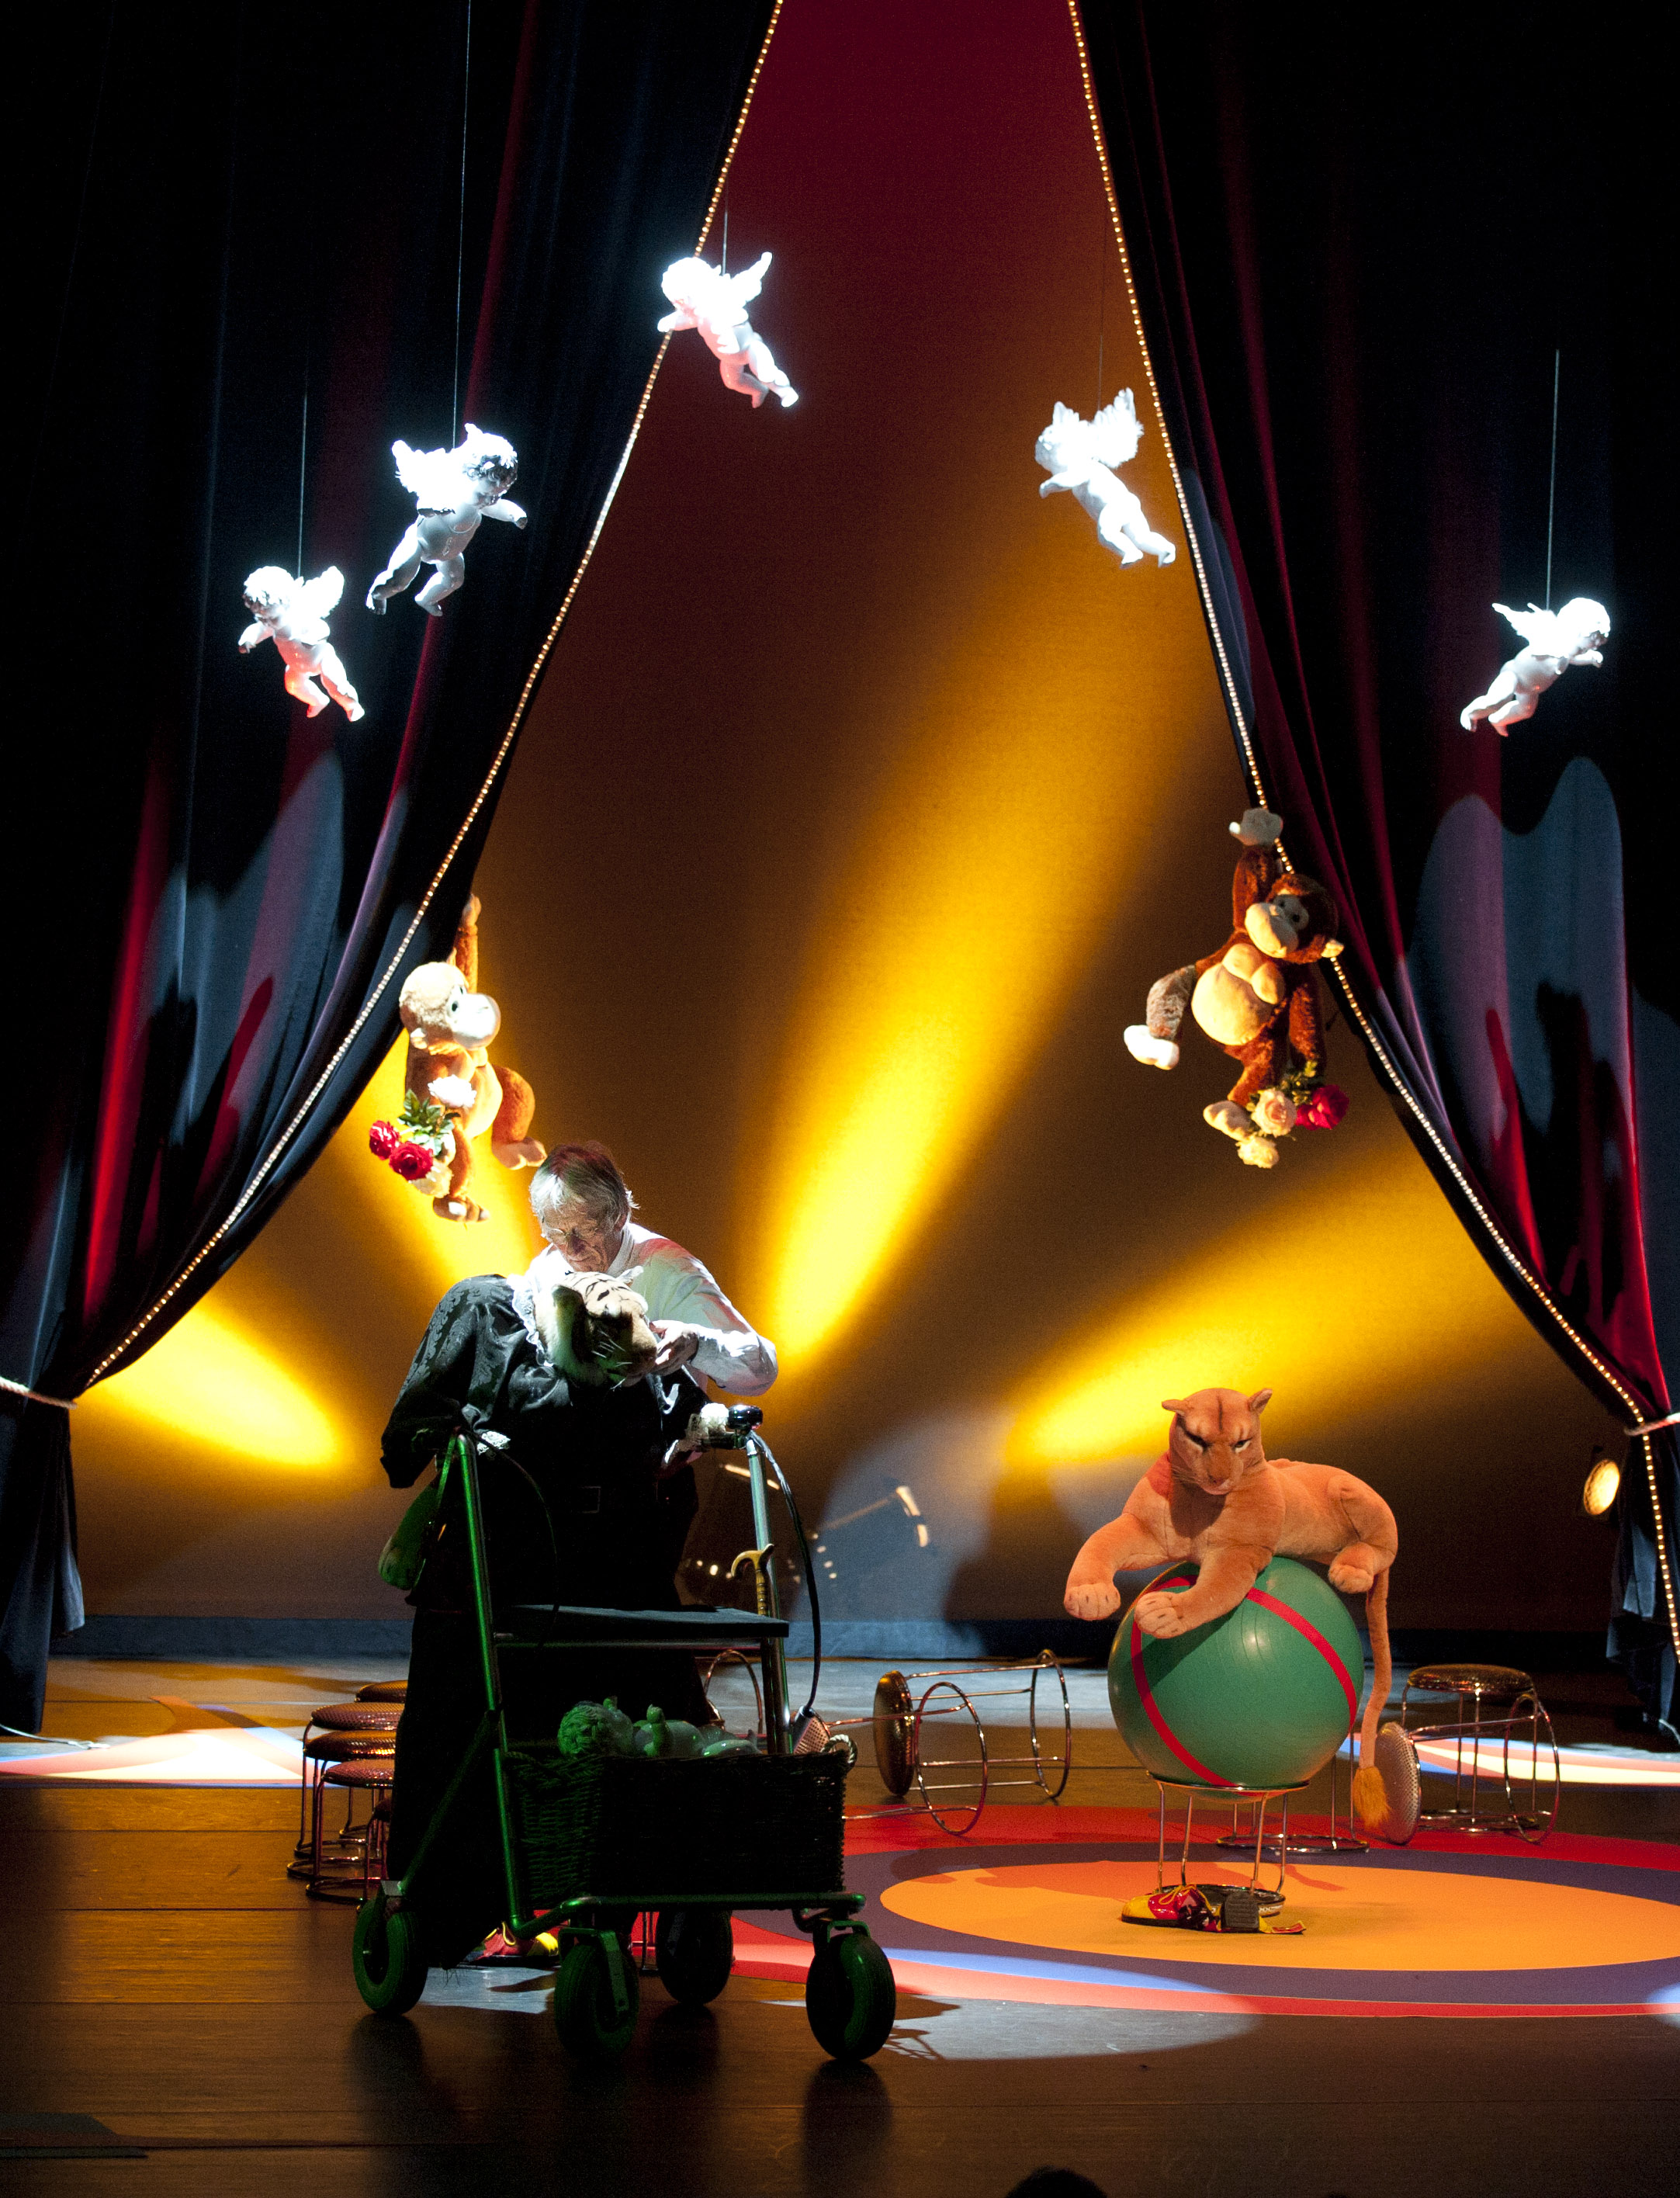 Circus Kribbe (2014)